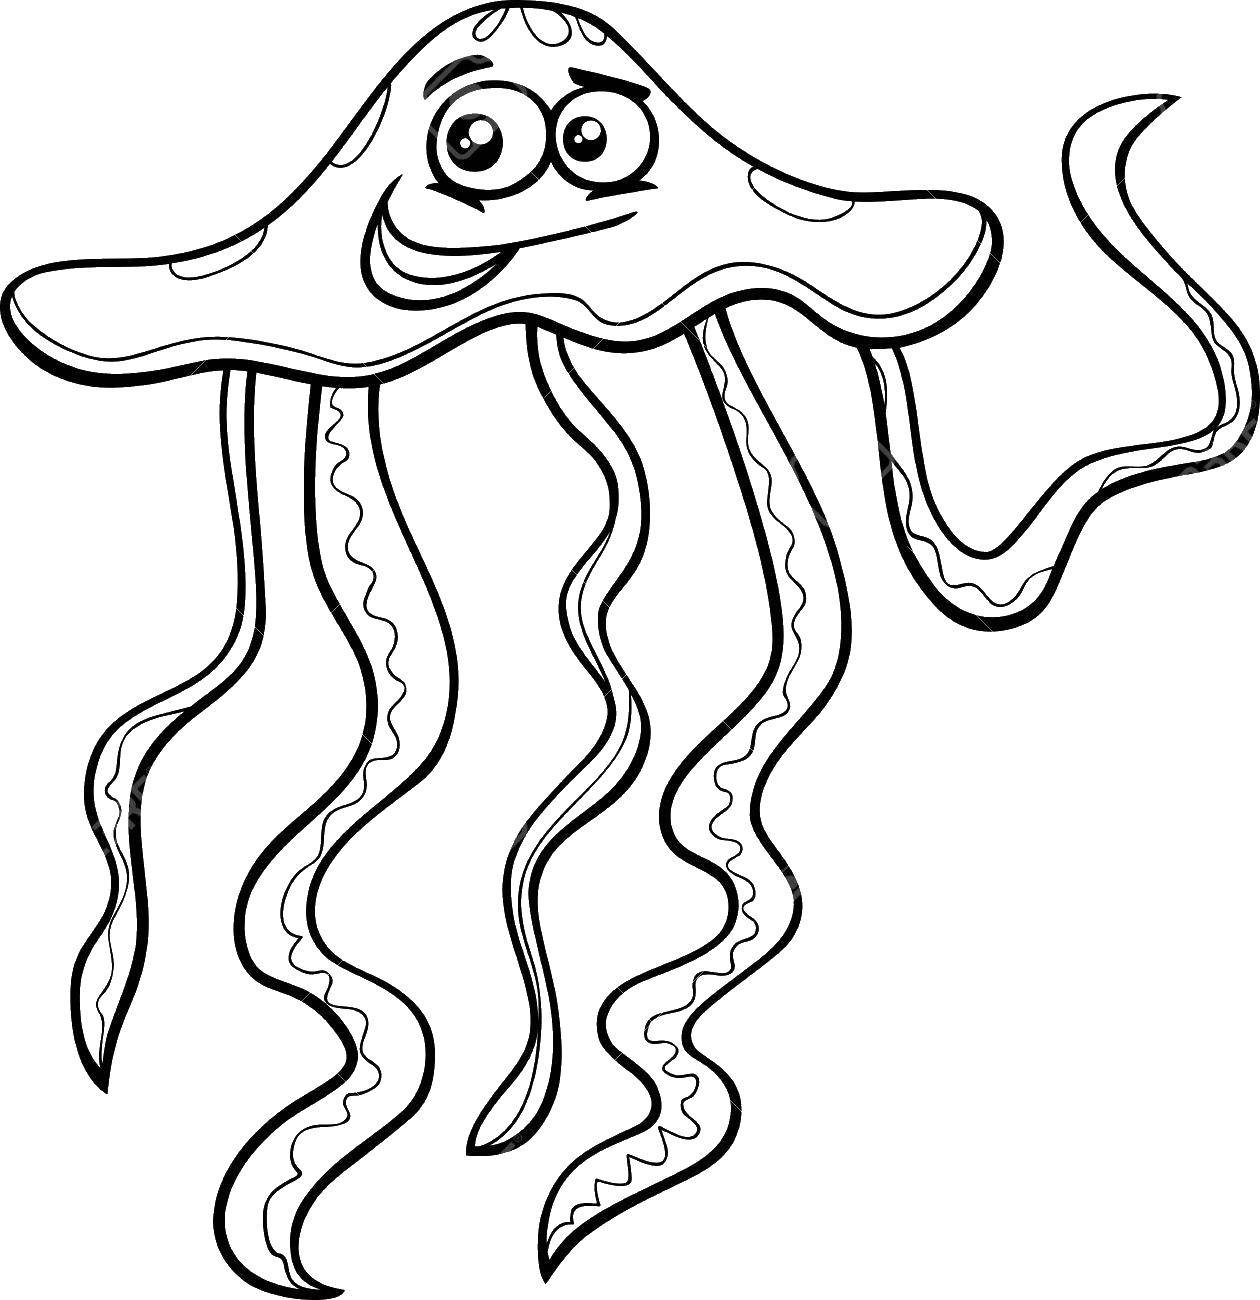 Название: Раскраска Смешная медуза. Категория: Морские обитатели. Теги: Подводный мир, медуза.